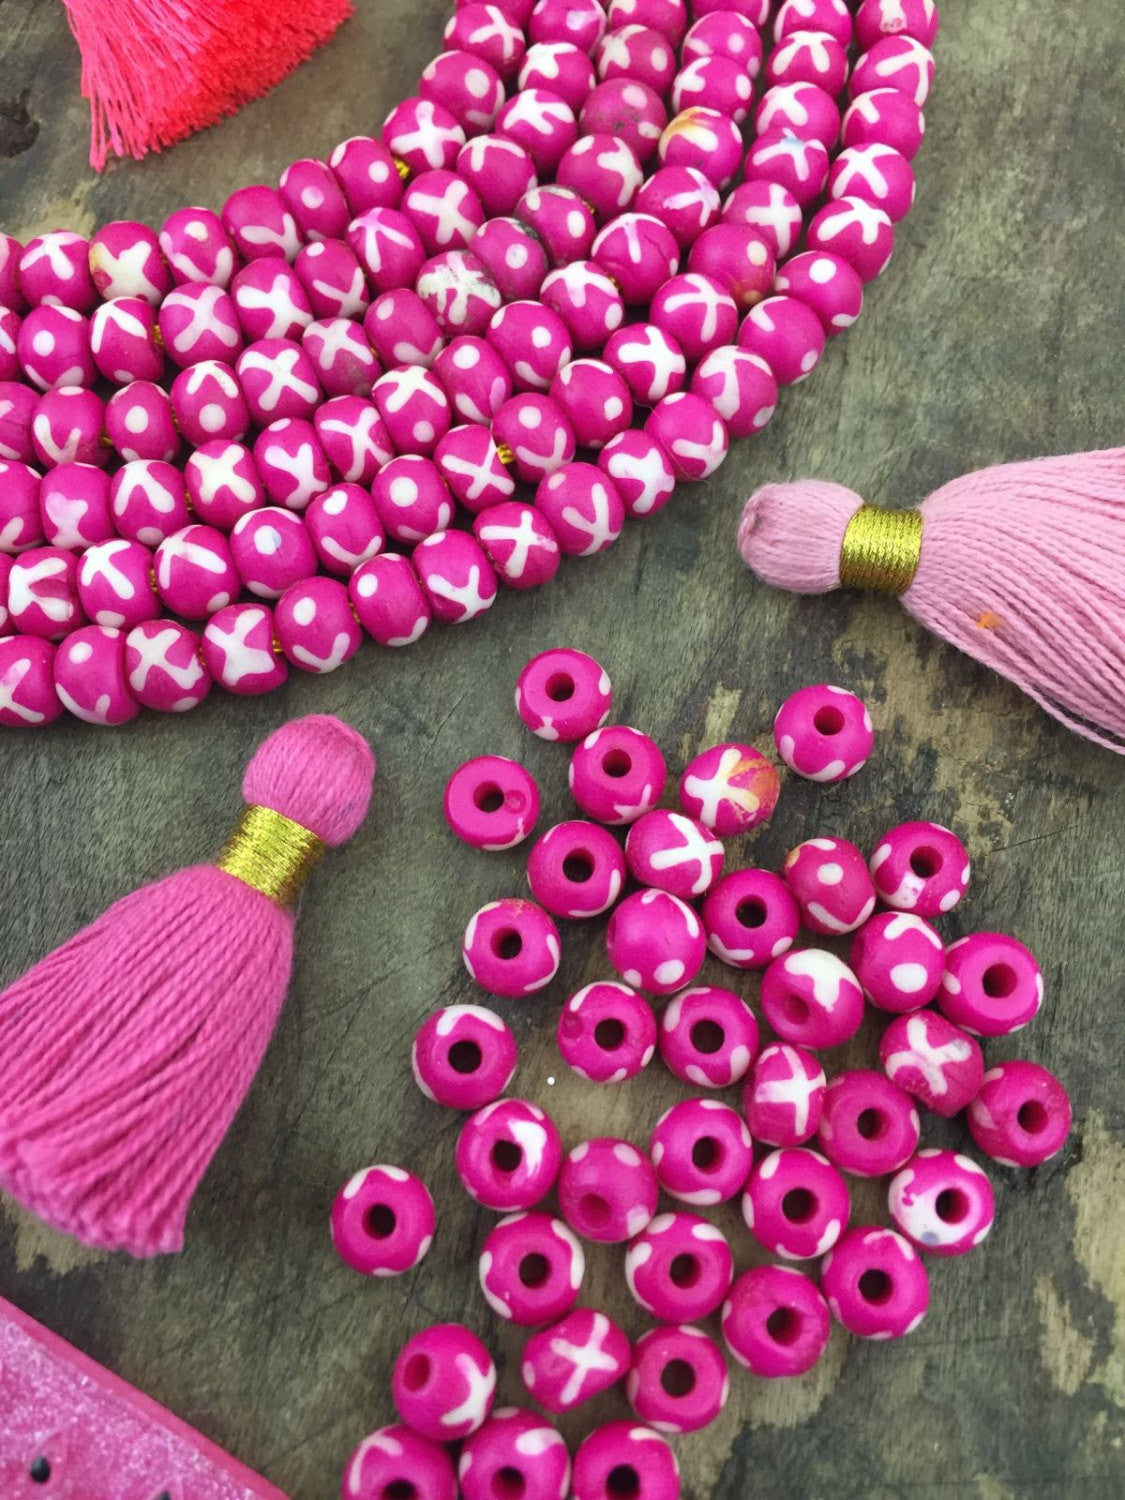 Pink & Cream X.X. : Painted, Large Hole Bone Rondelle Beads, 6x4mm, Boho Natural Craft, Tribal, Bohemian Mala Jewelry Making Supply, 40 pcs - ShopWomanShopsWorld.com. Bone Beads, Tassels, Pom Poms, African Beads.